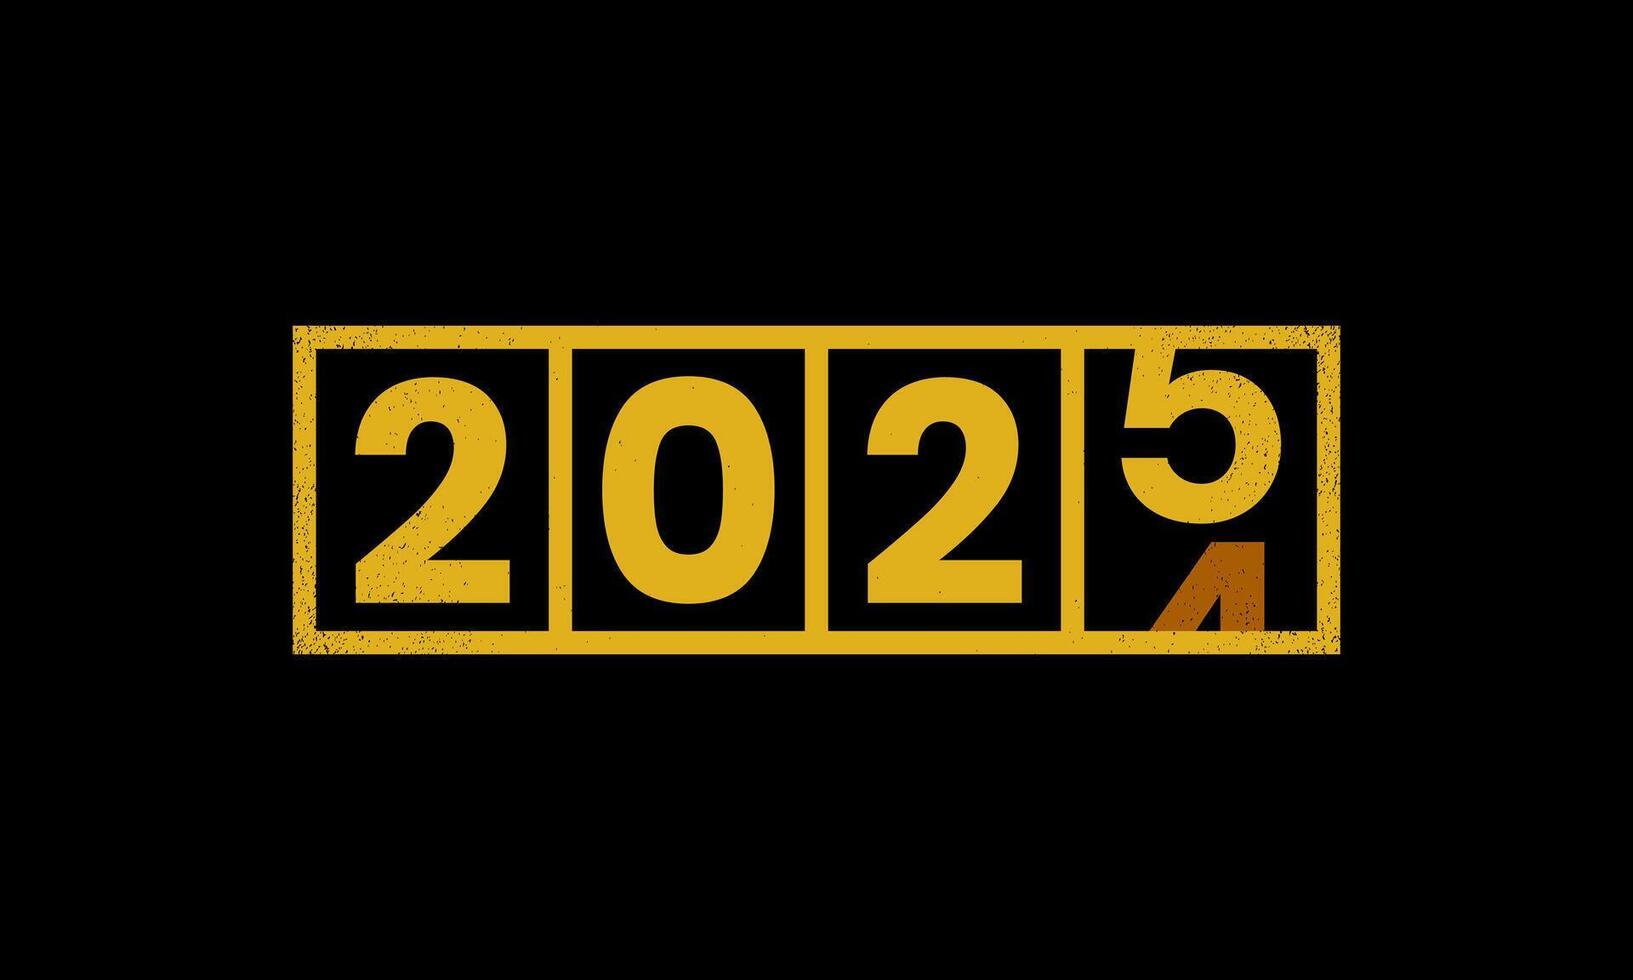 2025 feliz Novo ano fundo Projeto. vetor